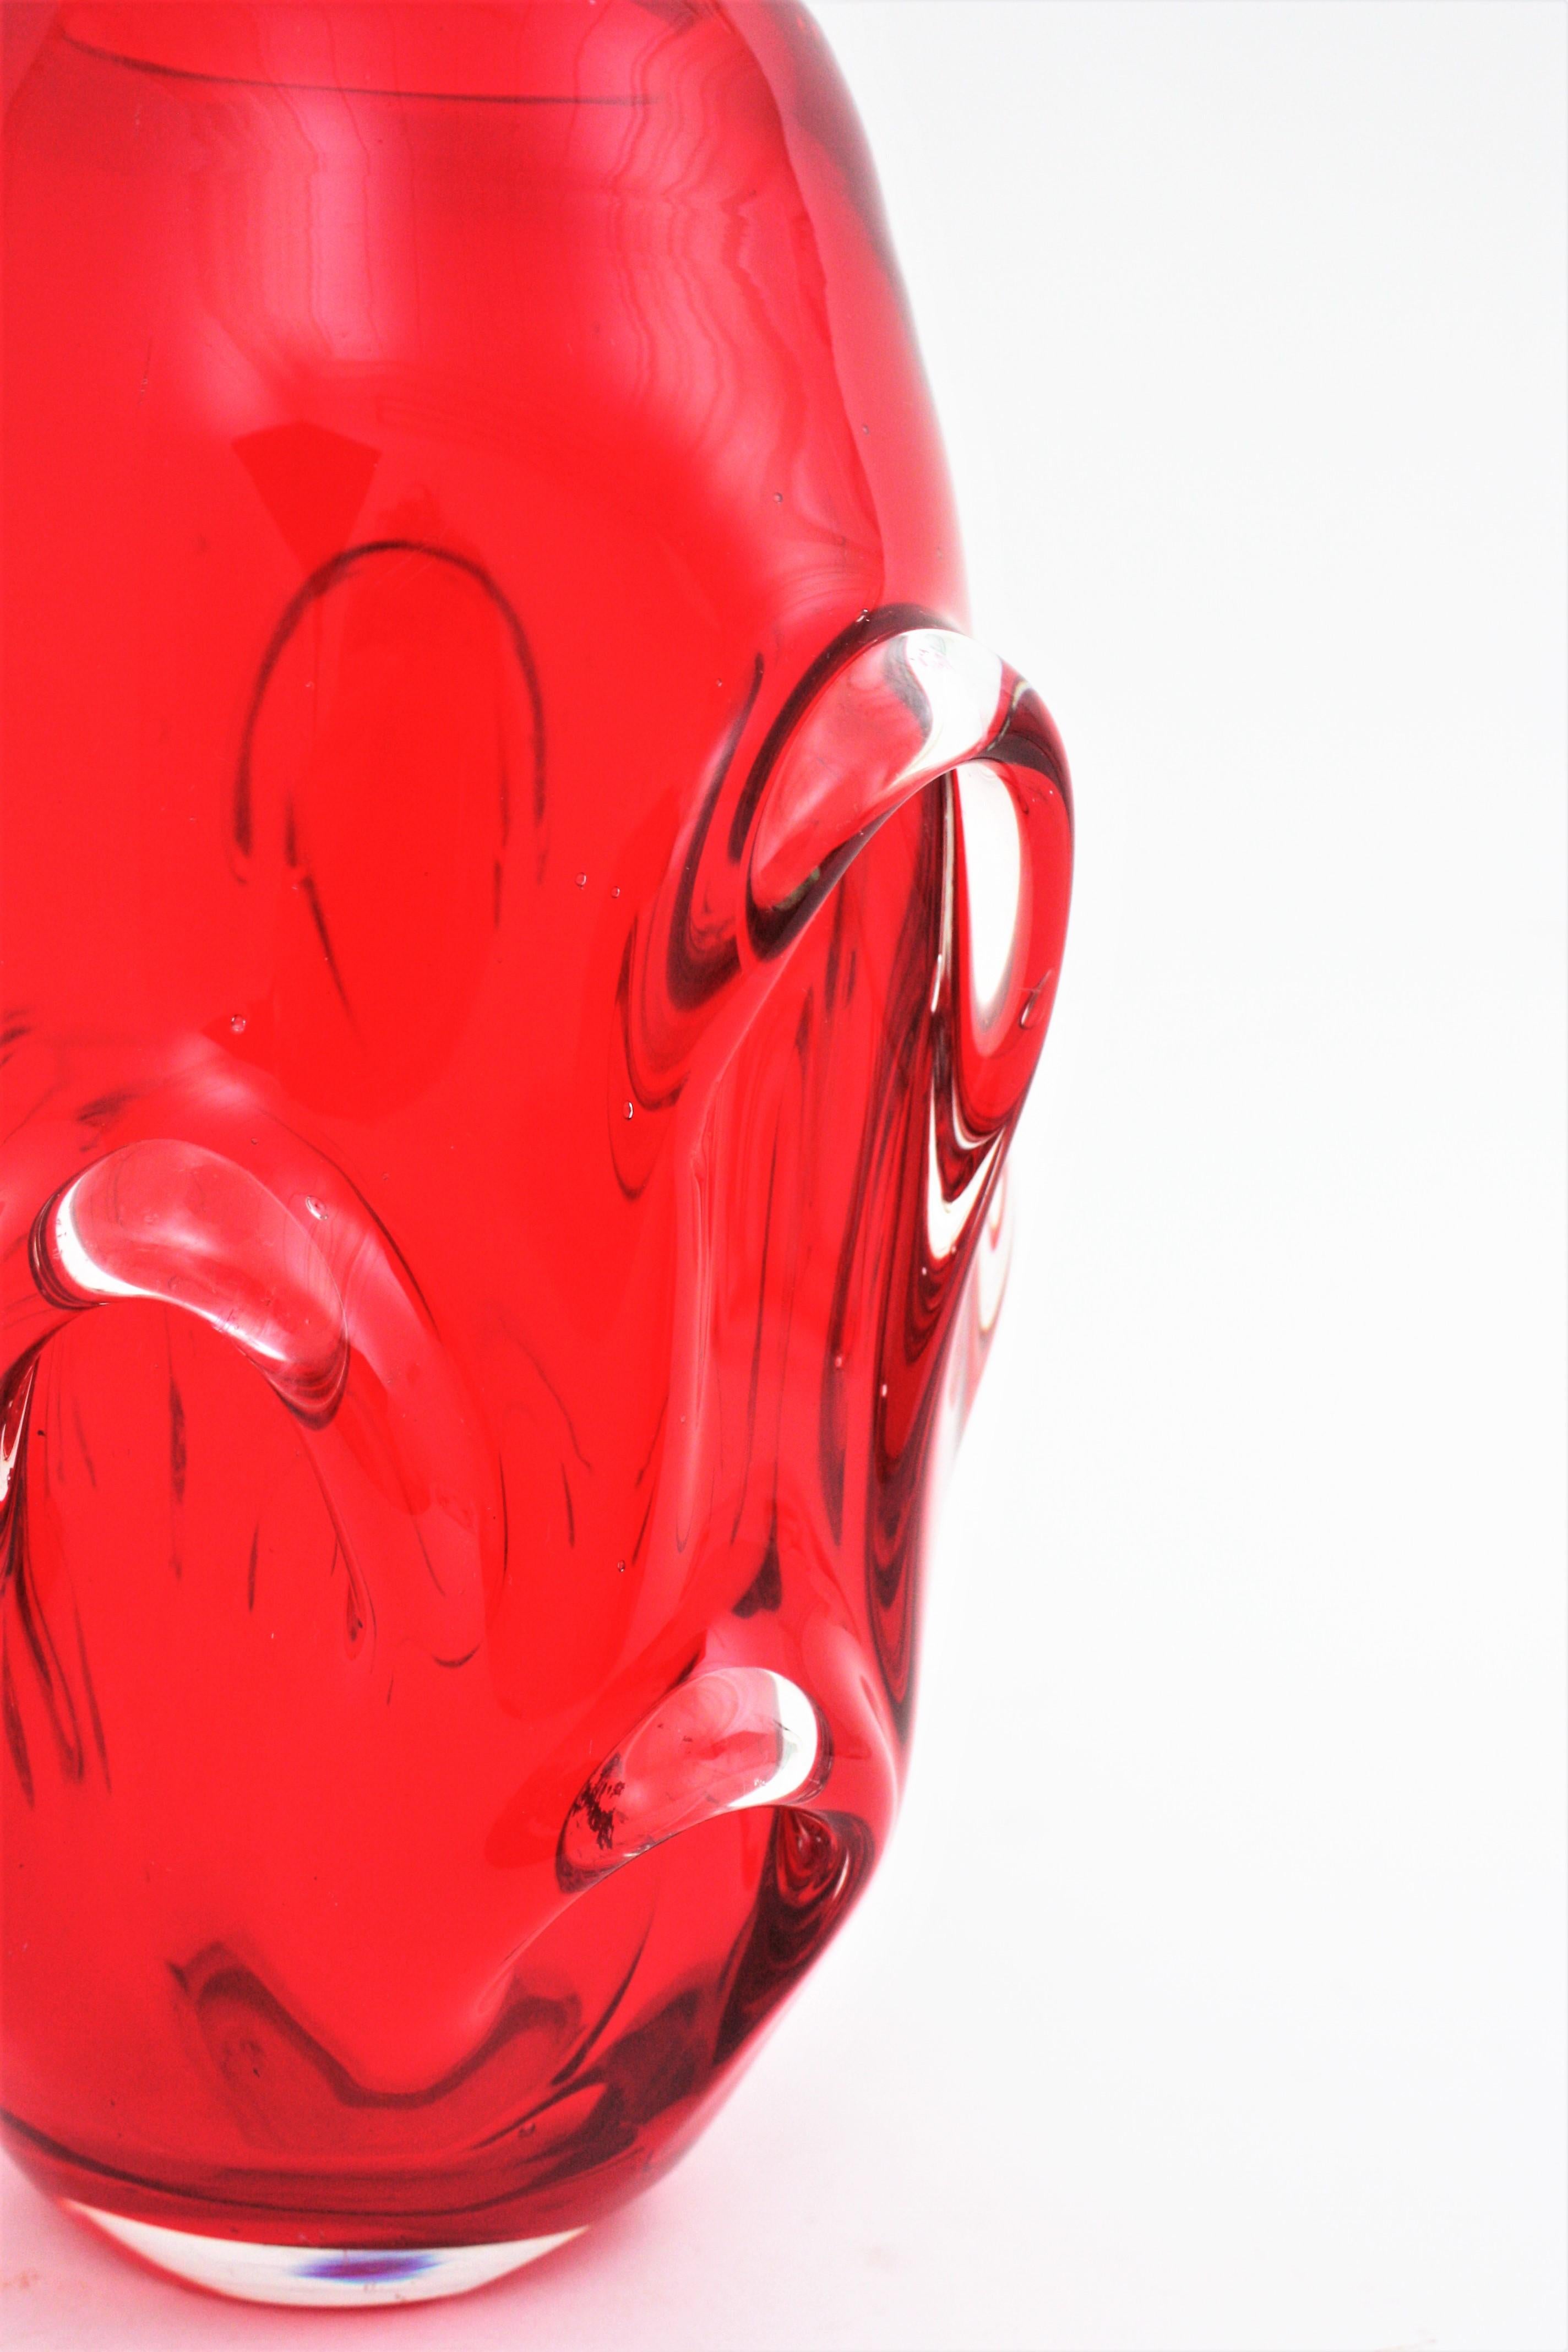 Archimede Seguso Murano Sommerso Red Art Glass Vase, 1960s For Sale 2